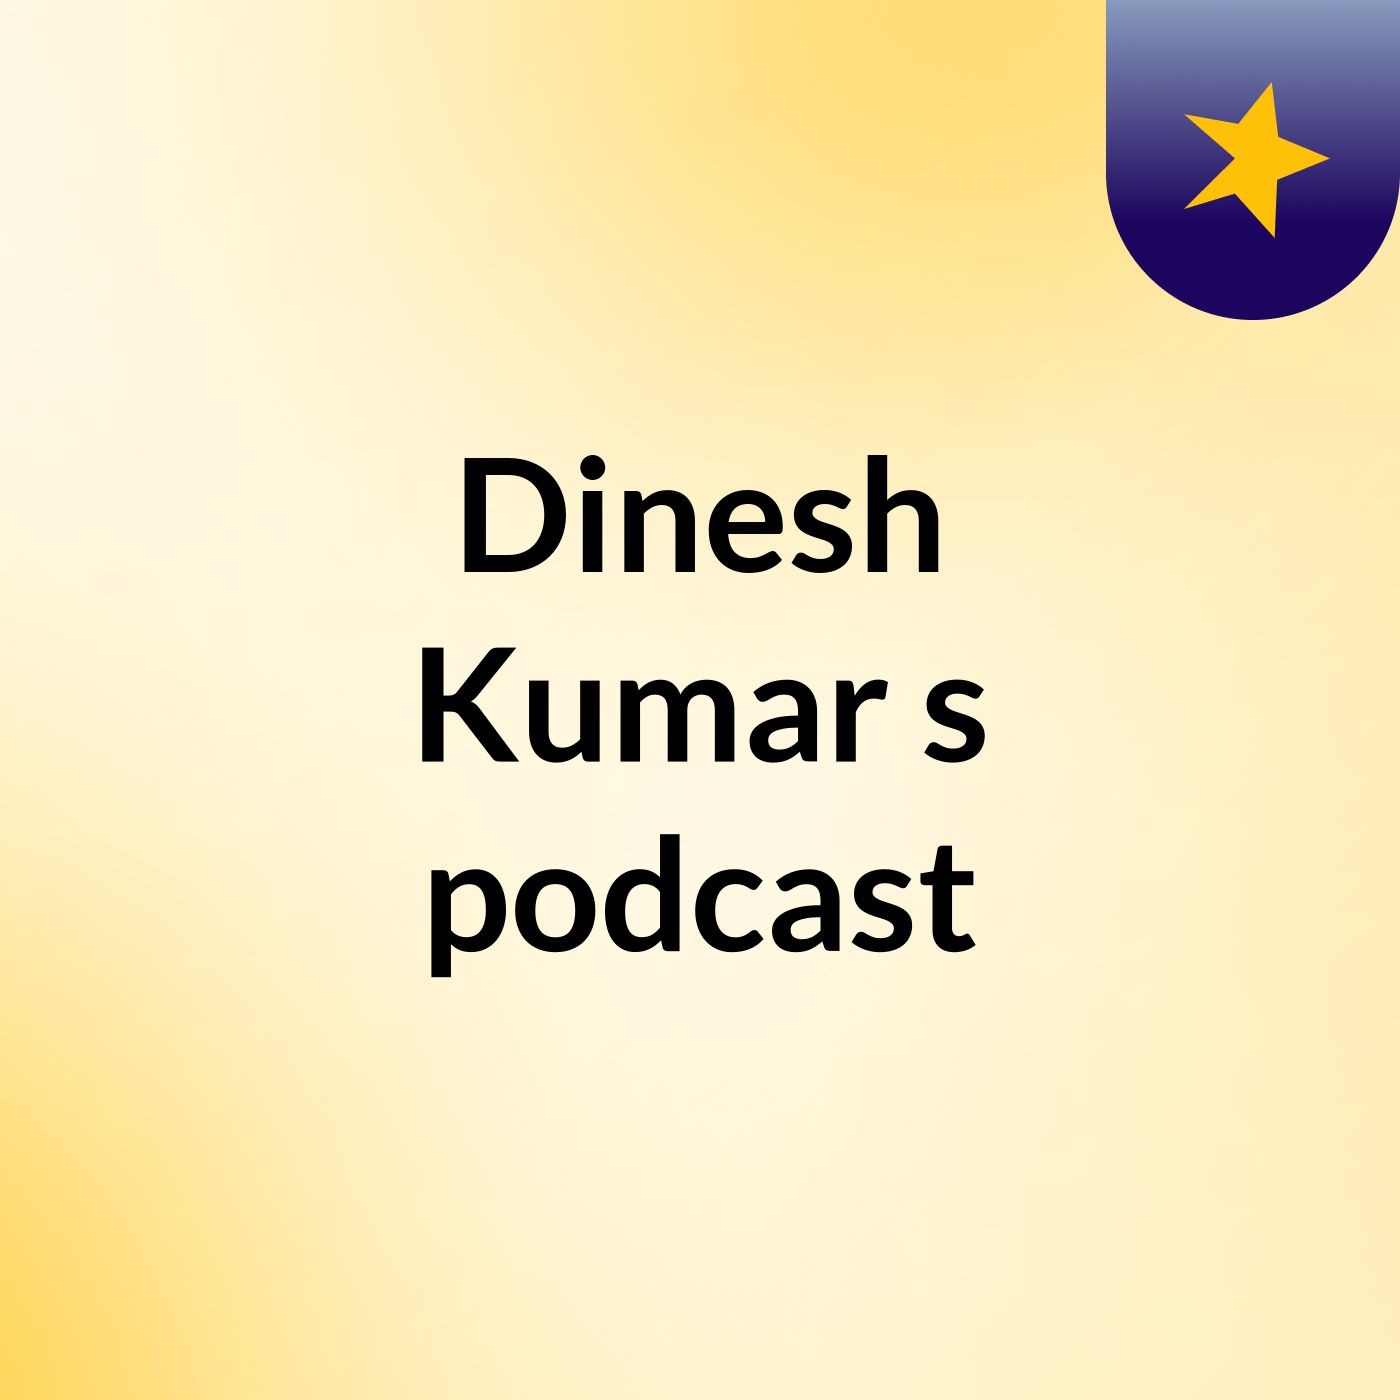 Episode 2 - Dinesh Kumar's podcast